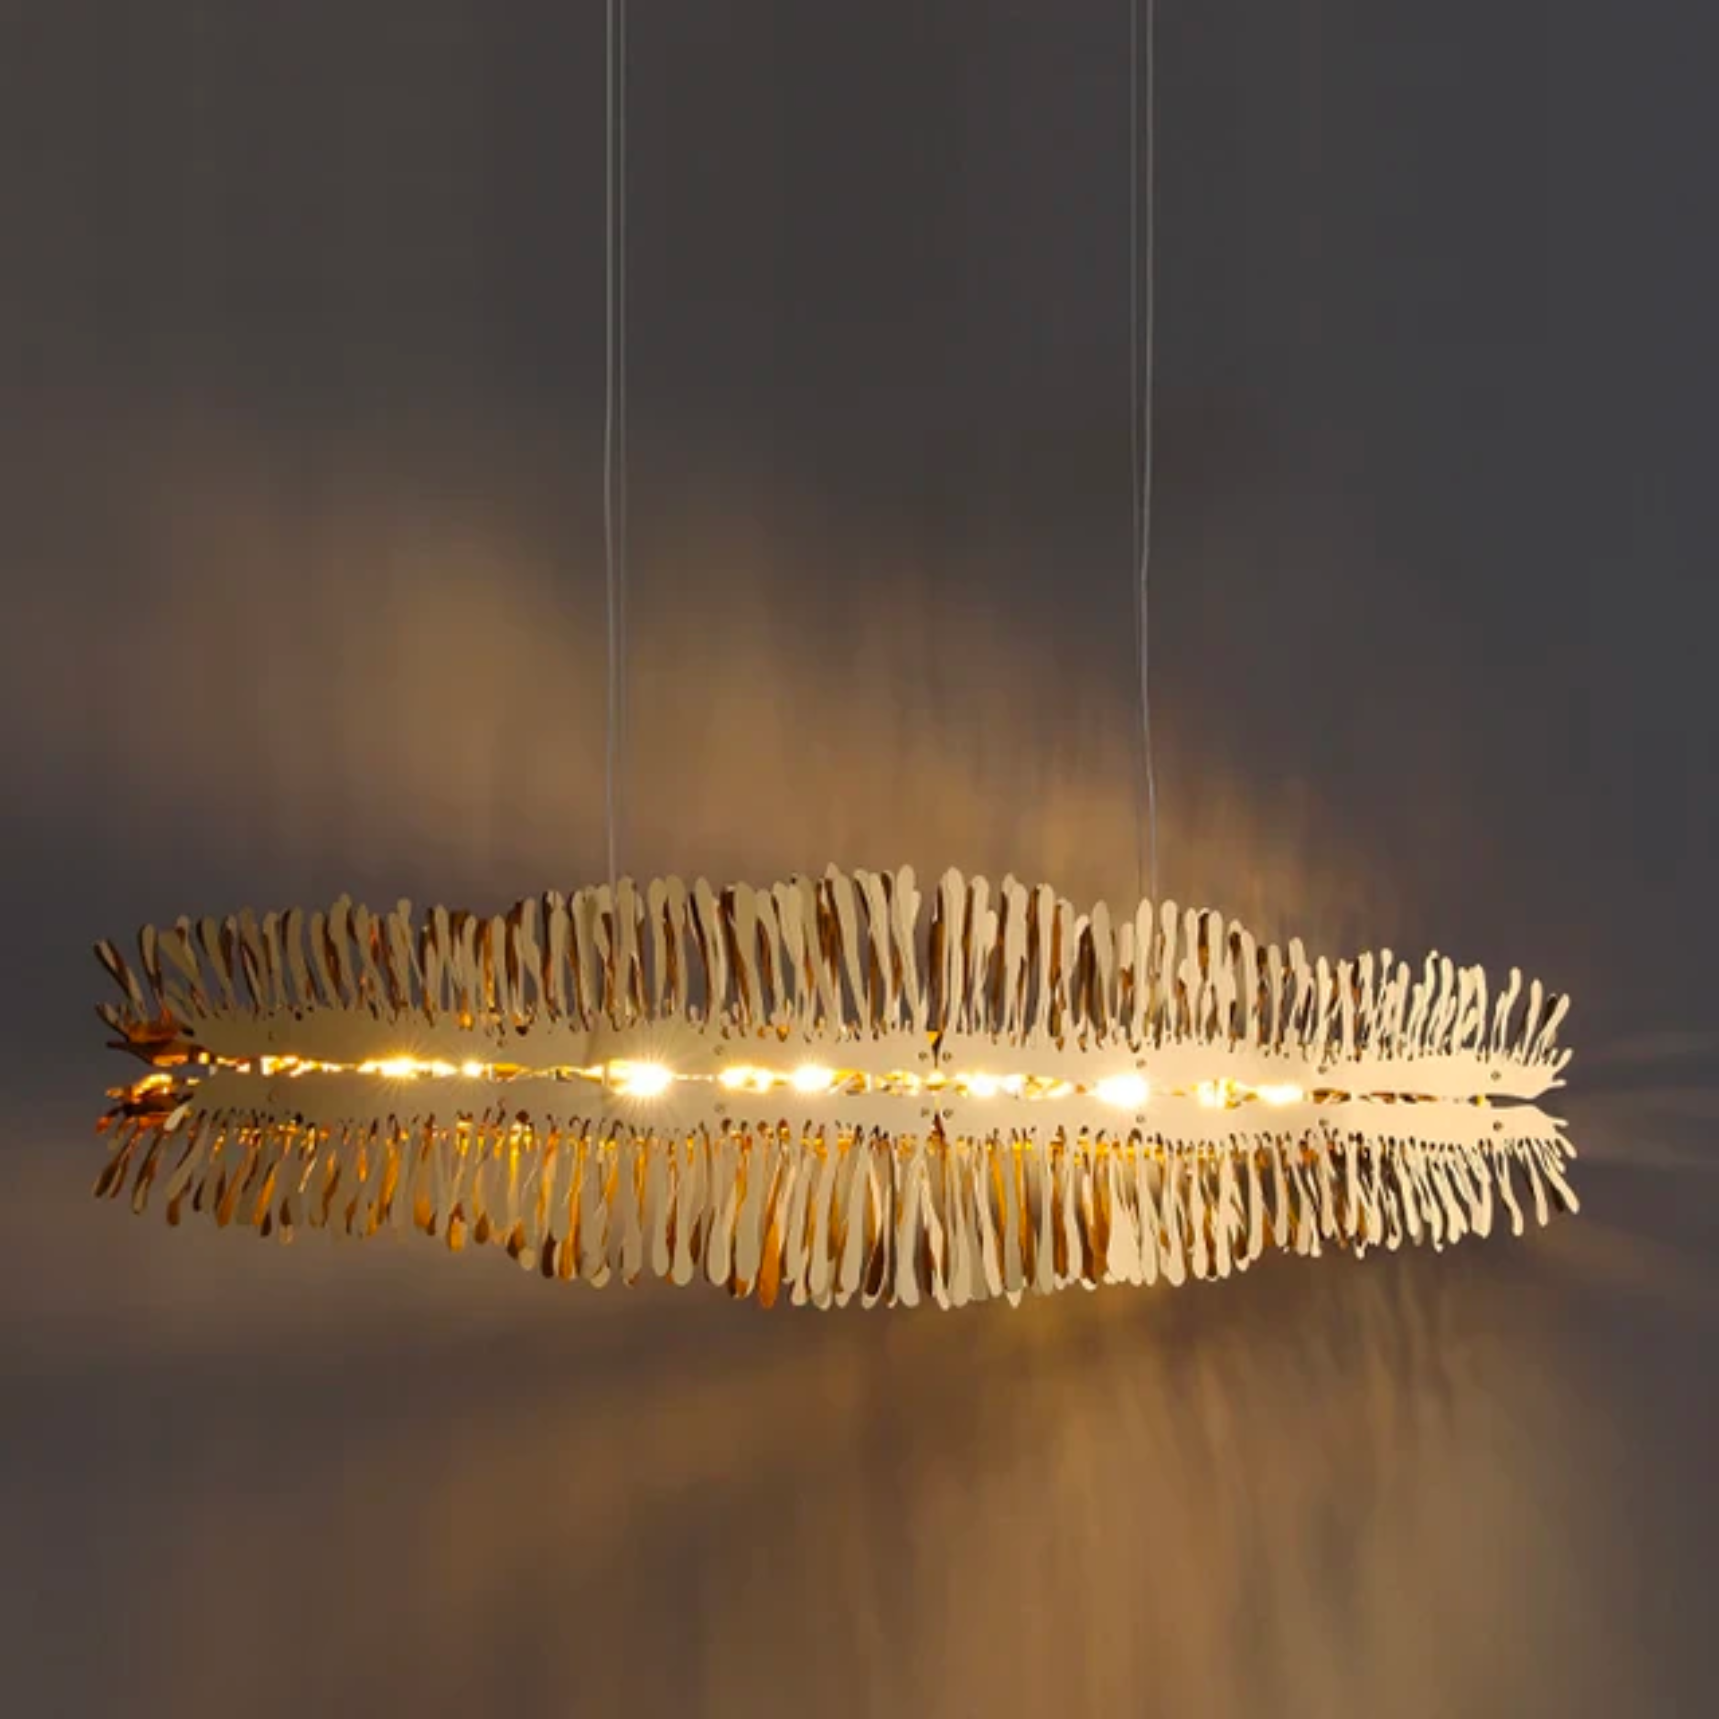 gold chandelier